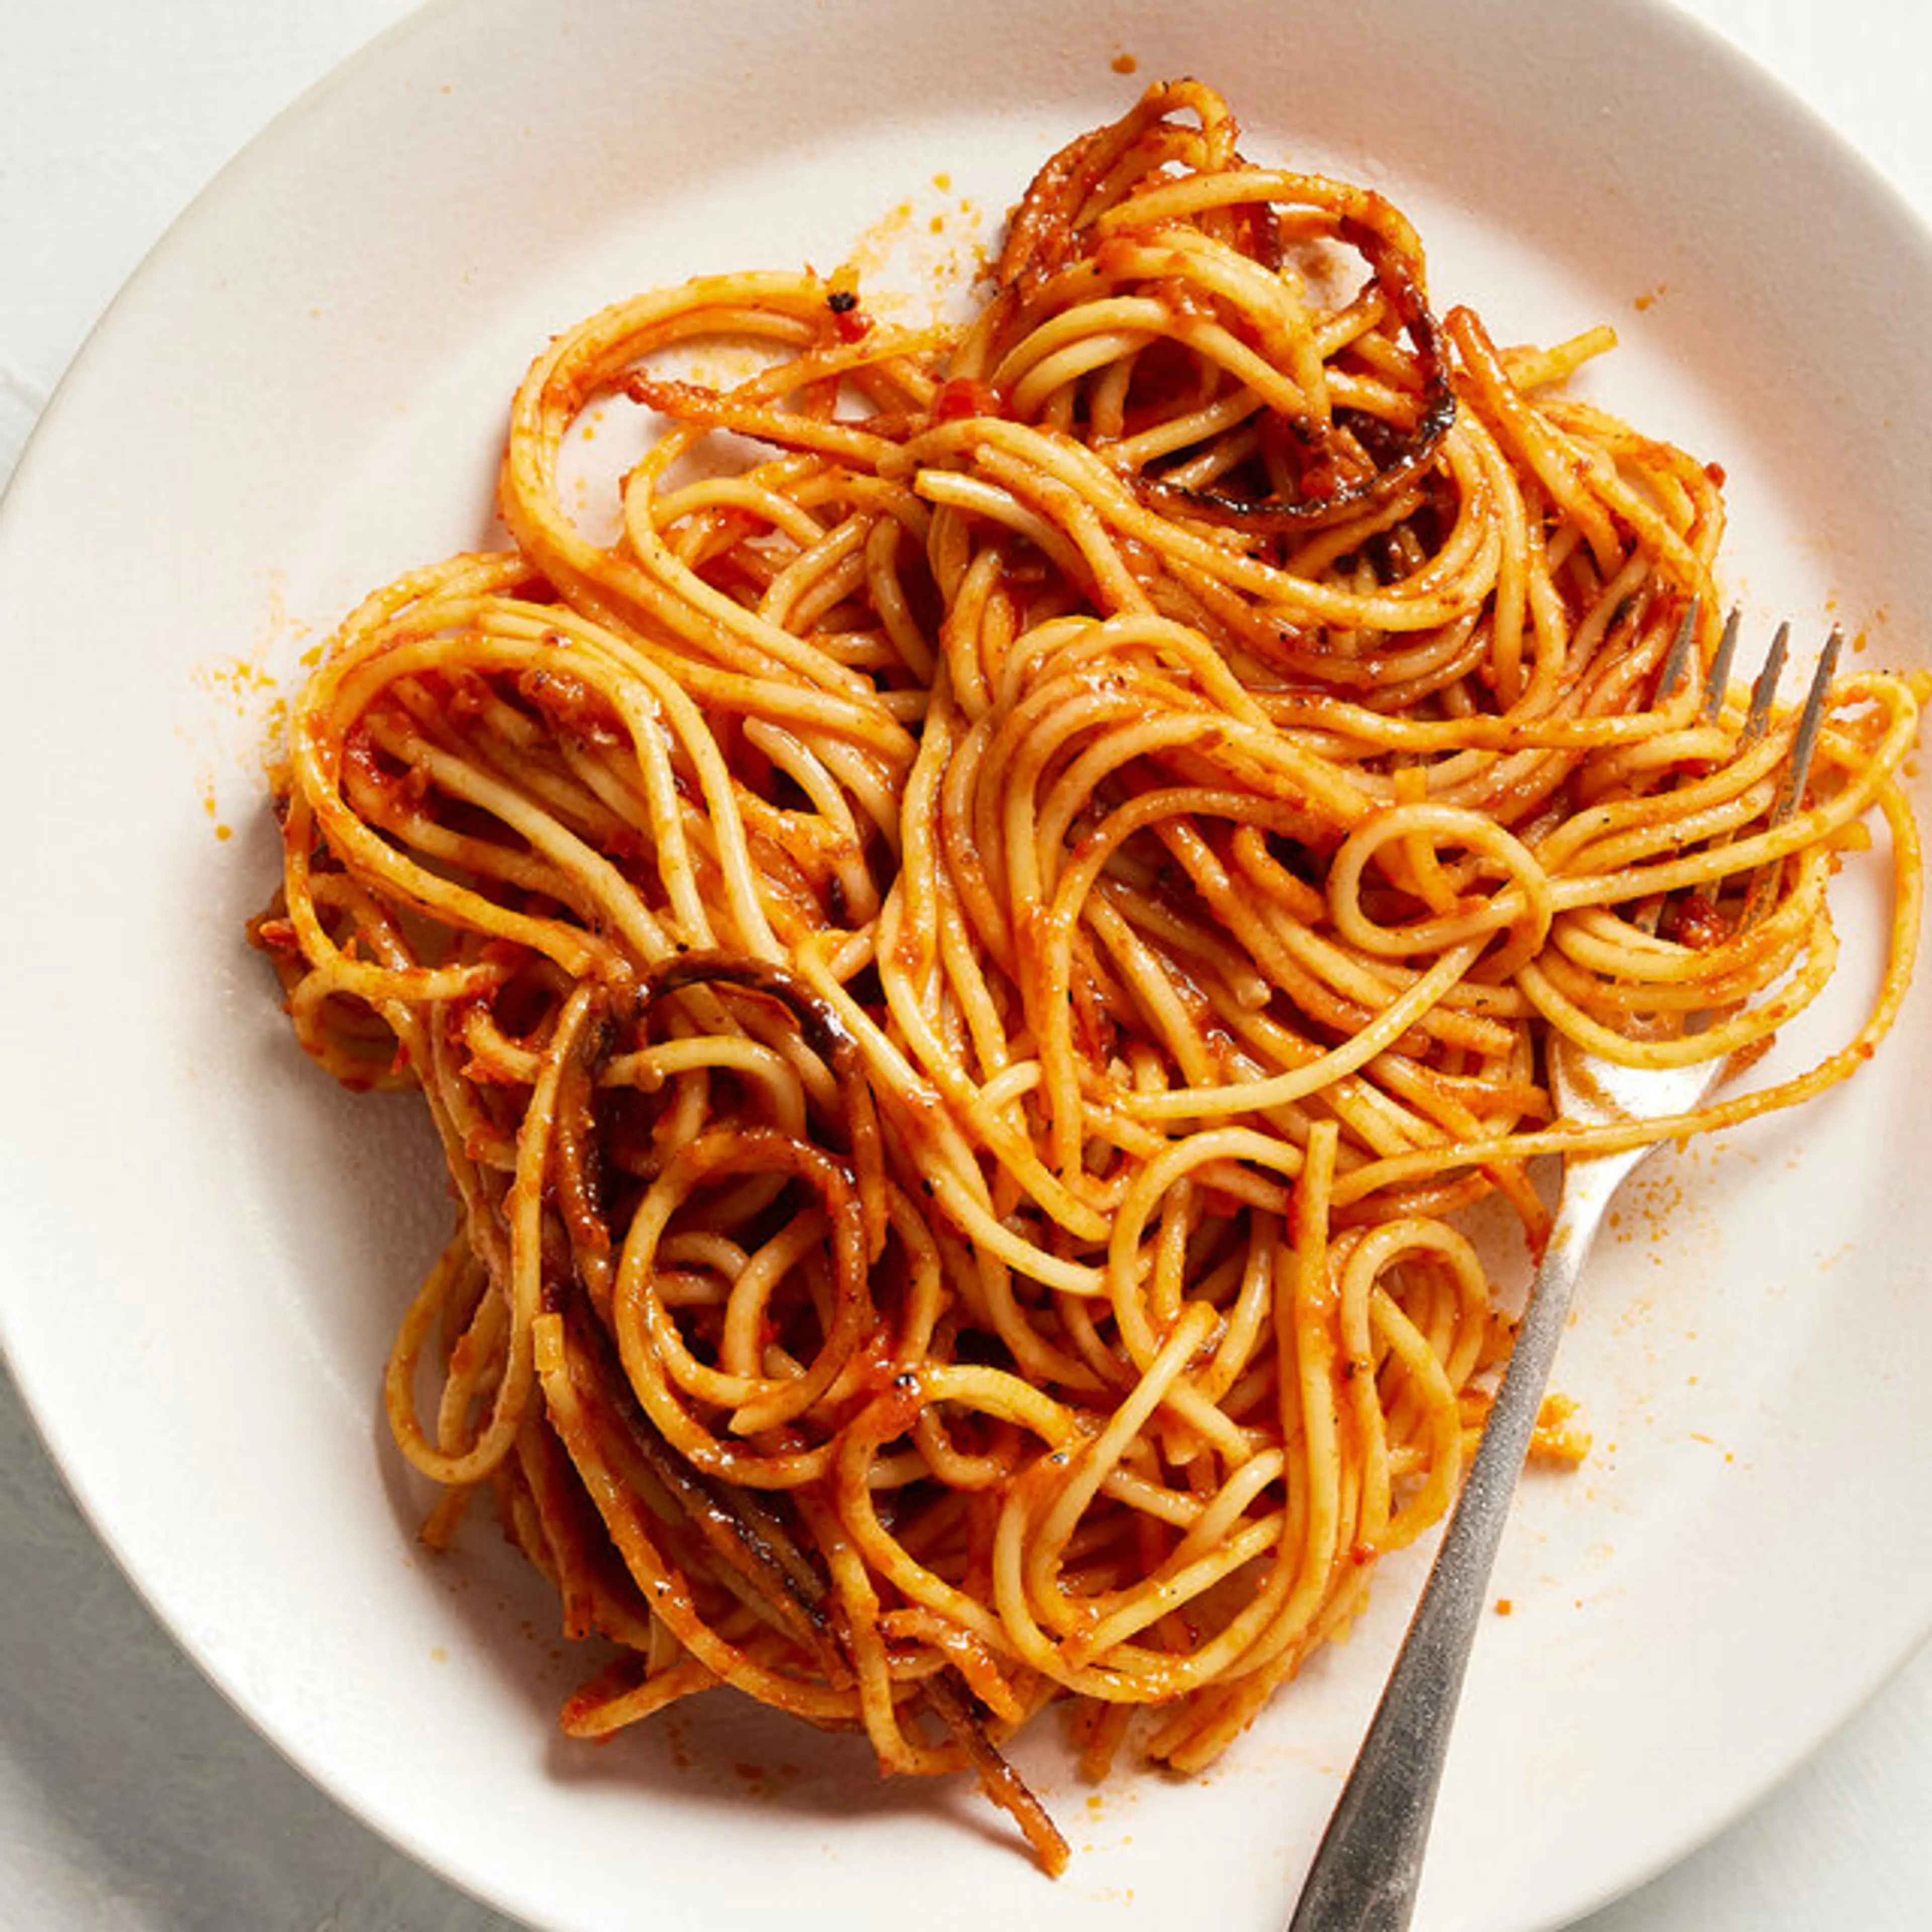 Spaghetti all'Assassina (Spicy Singed Tomato Pasta)